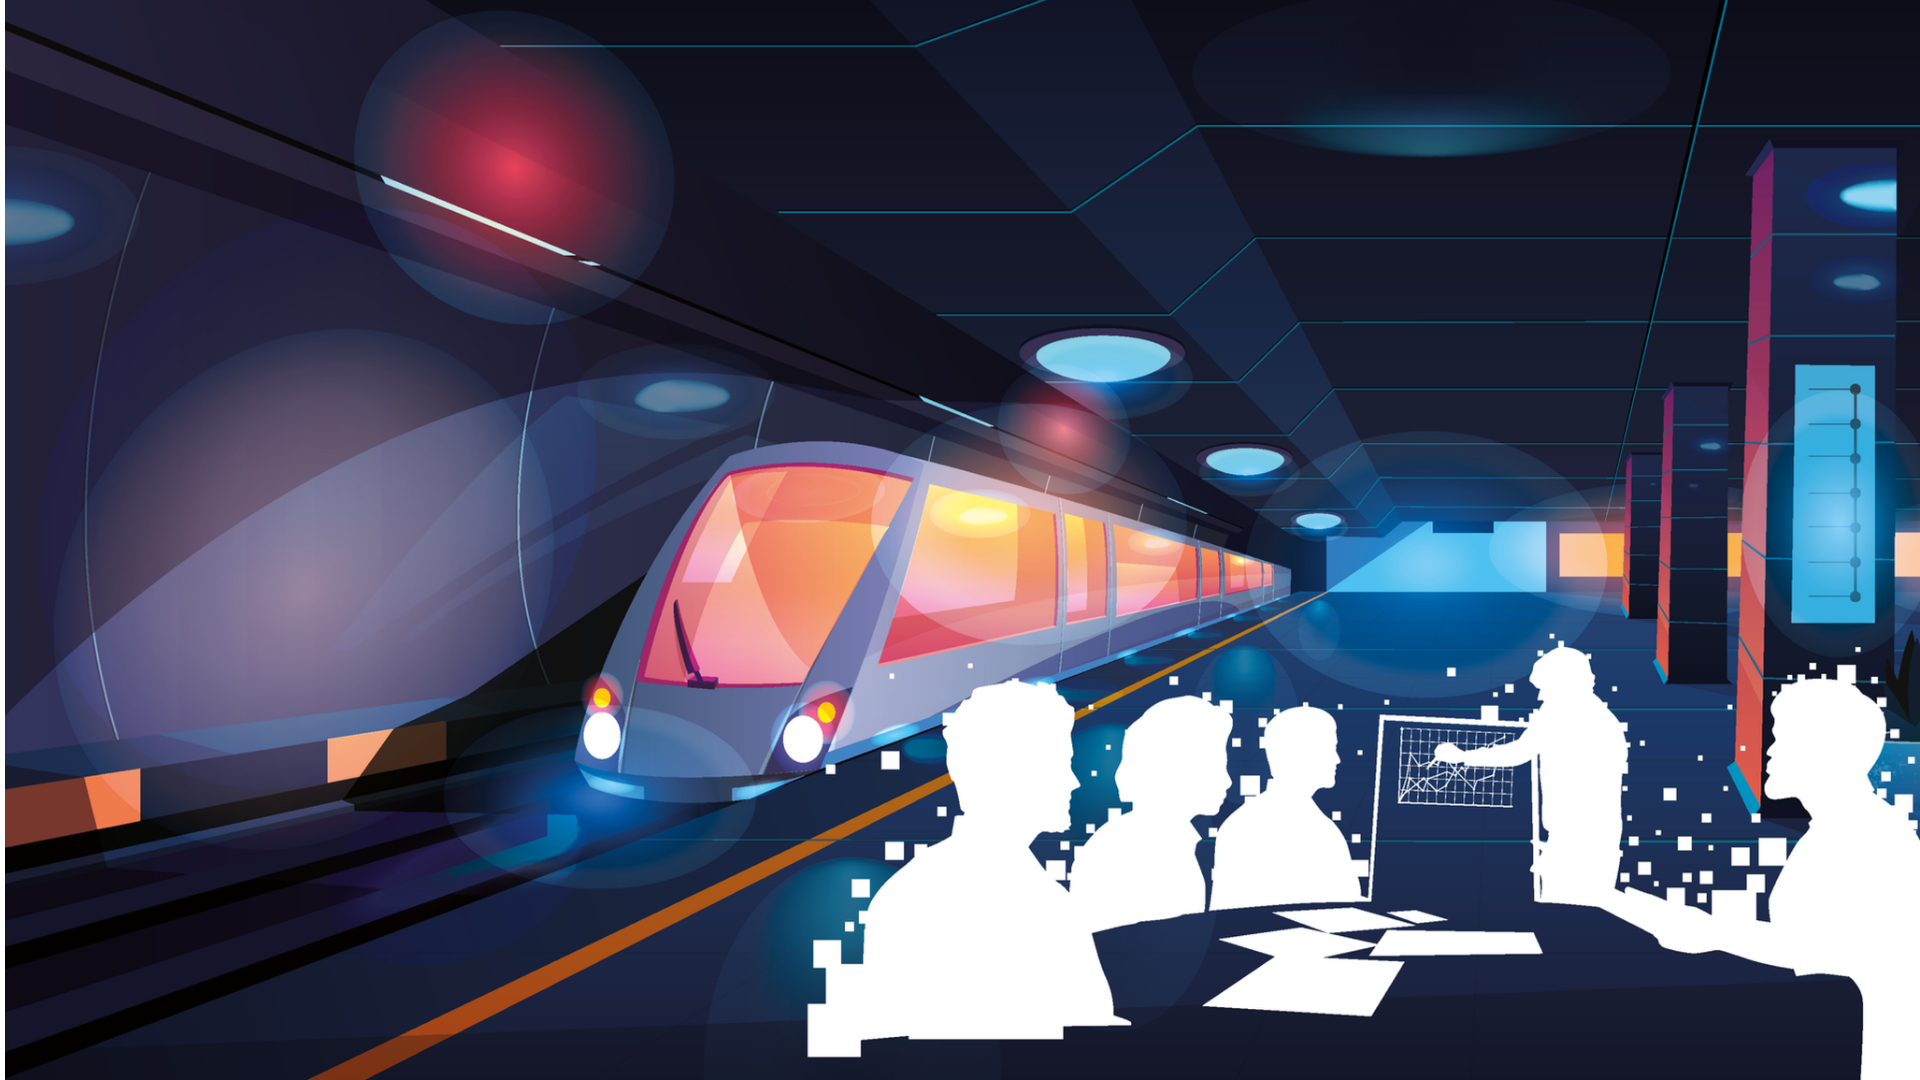 UIC-KORAIL Training Session on Railway Passenger Service based on IT Technology